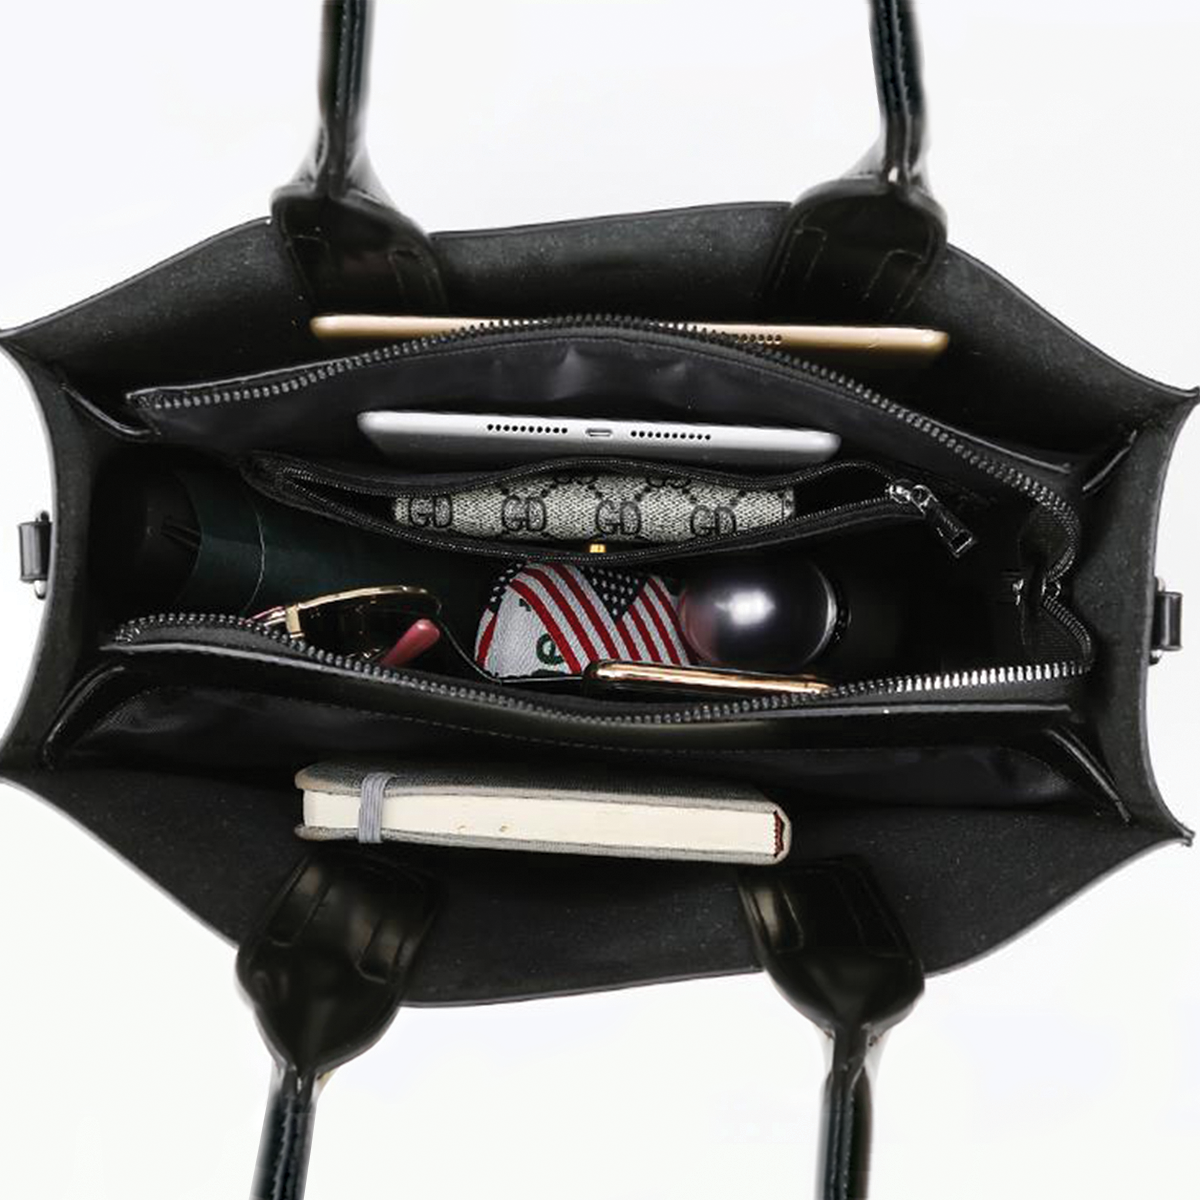 Reduce Stress At Work With English Setter - Luxury Handbag V1